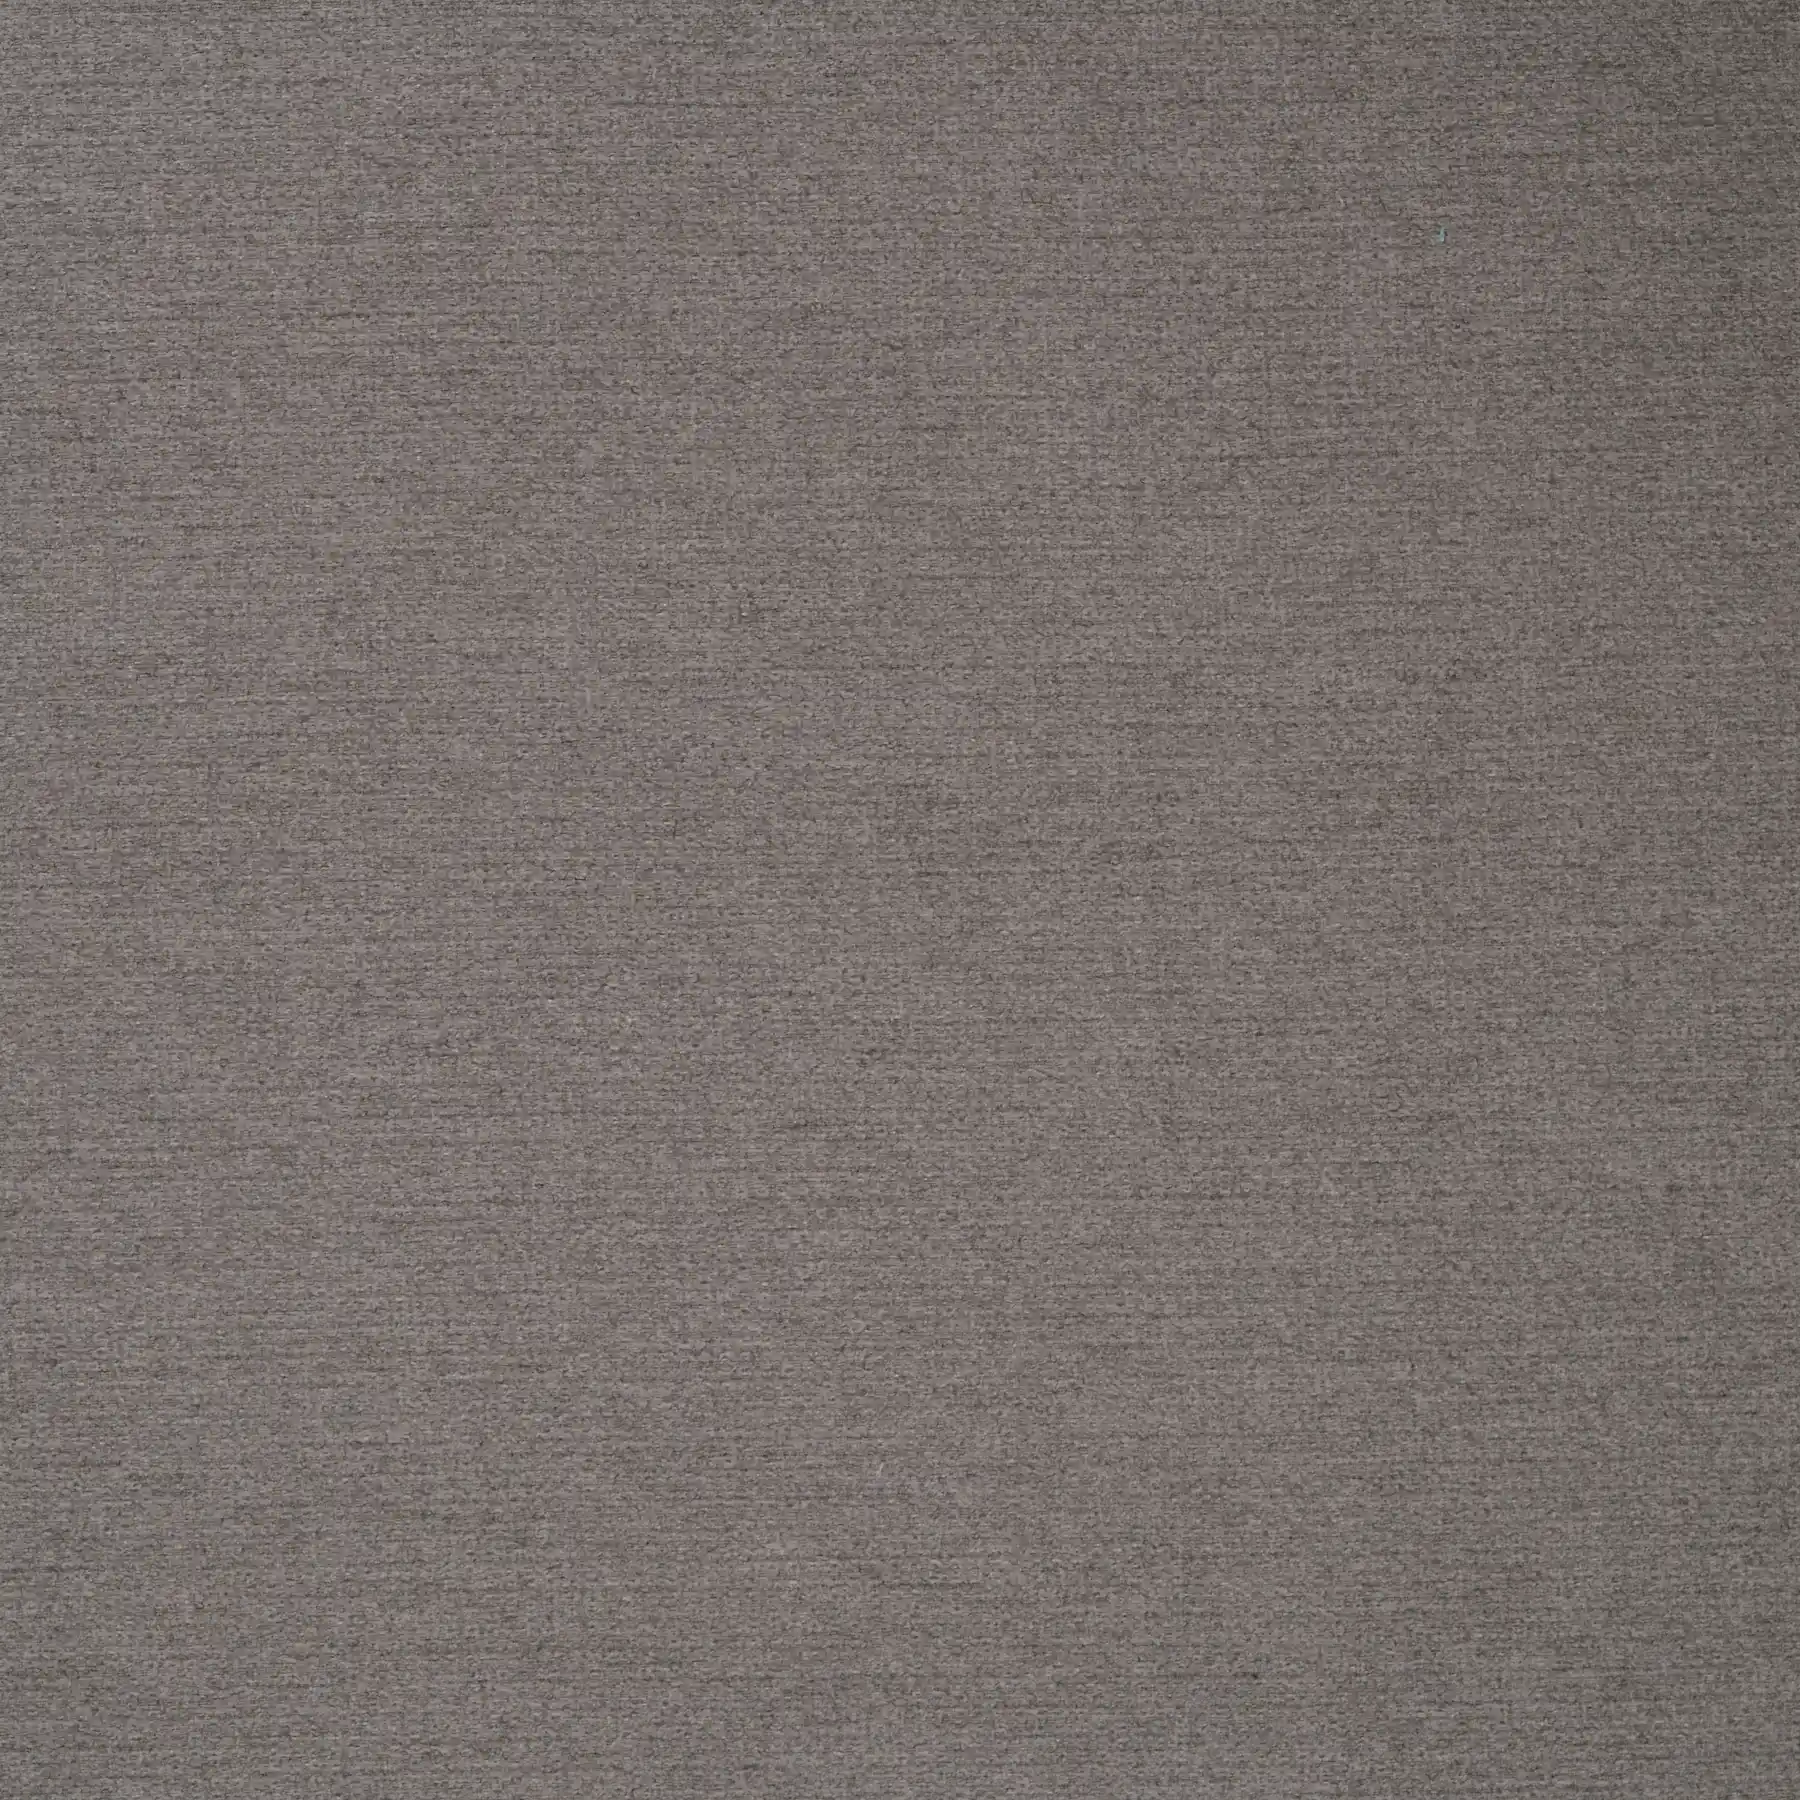 Camiseta interior niño manga corta algodón Fabio 8453 – Ceferino Textiles